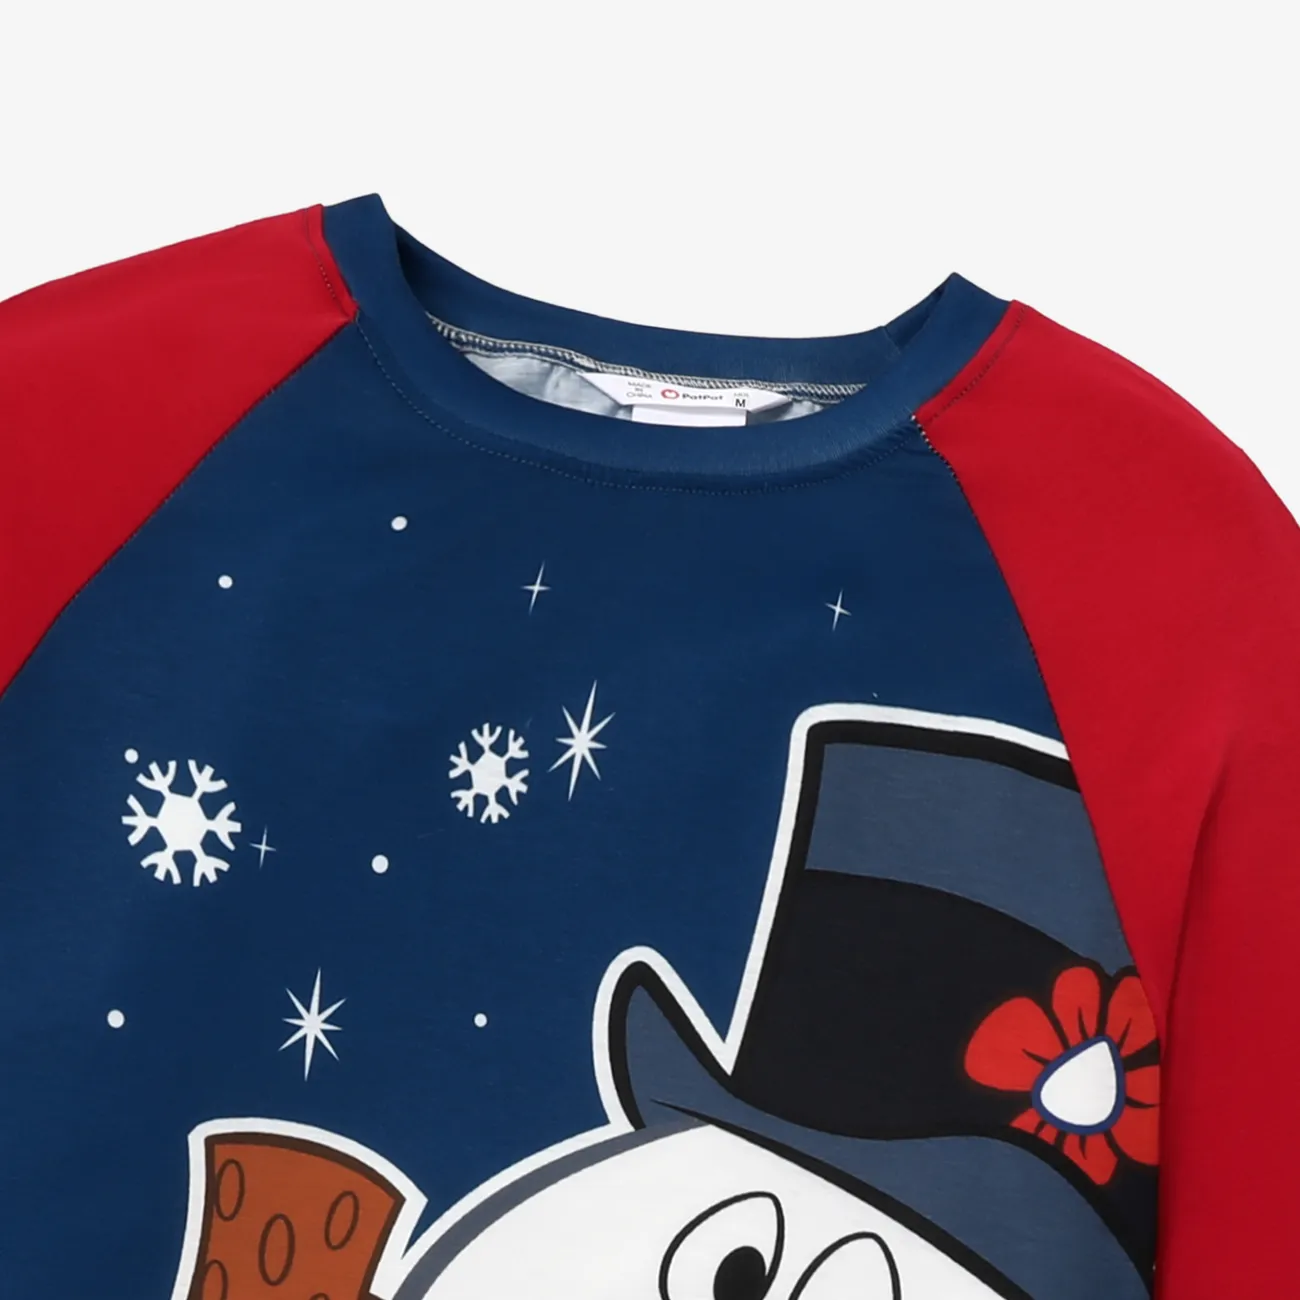 Frosty The Snowman 聖誕節 全家裝 長袖 親子裝 睡衣 (Flame Resistant) 彩色 big image 1